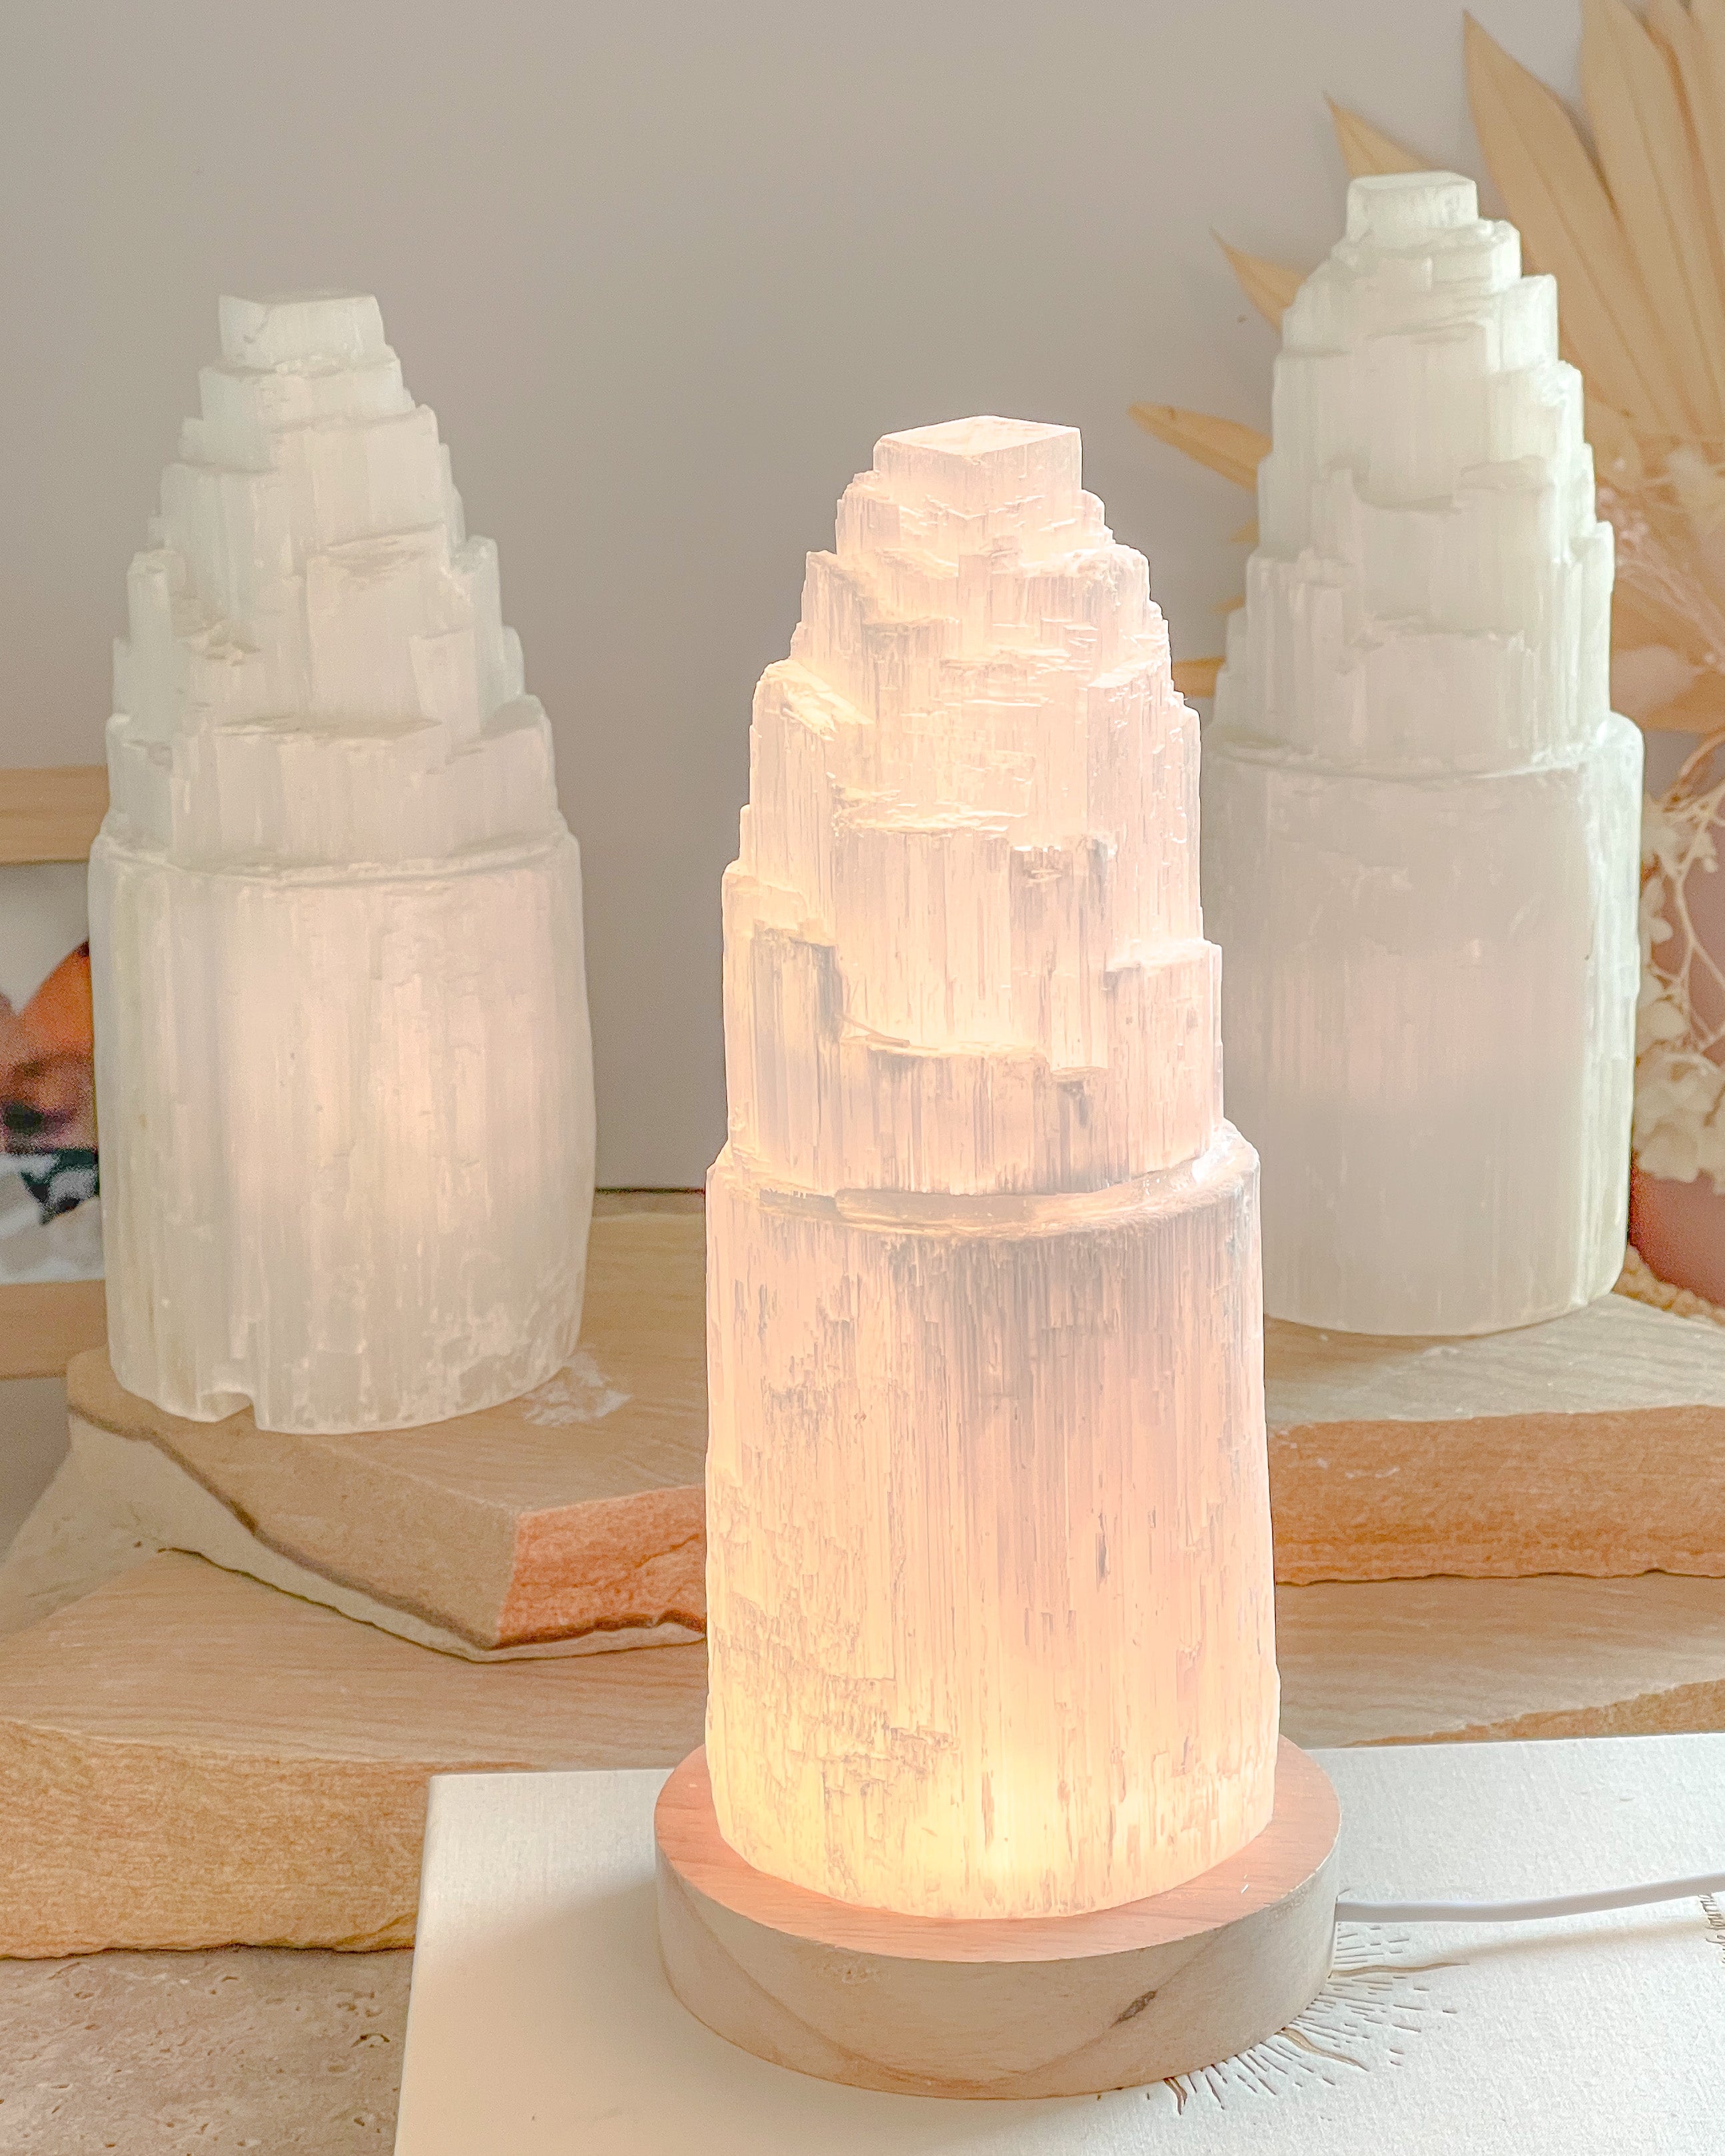 Selenite Lamp with Led Light Base // Cleansing + Healing + Moon Magic